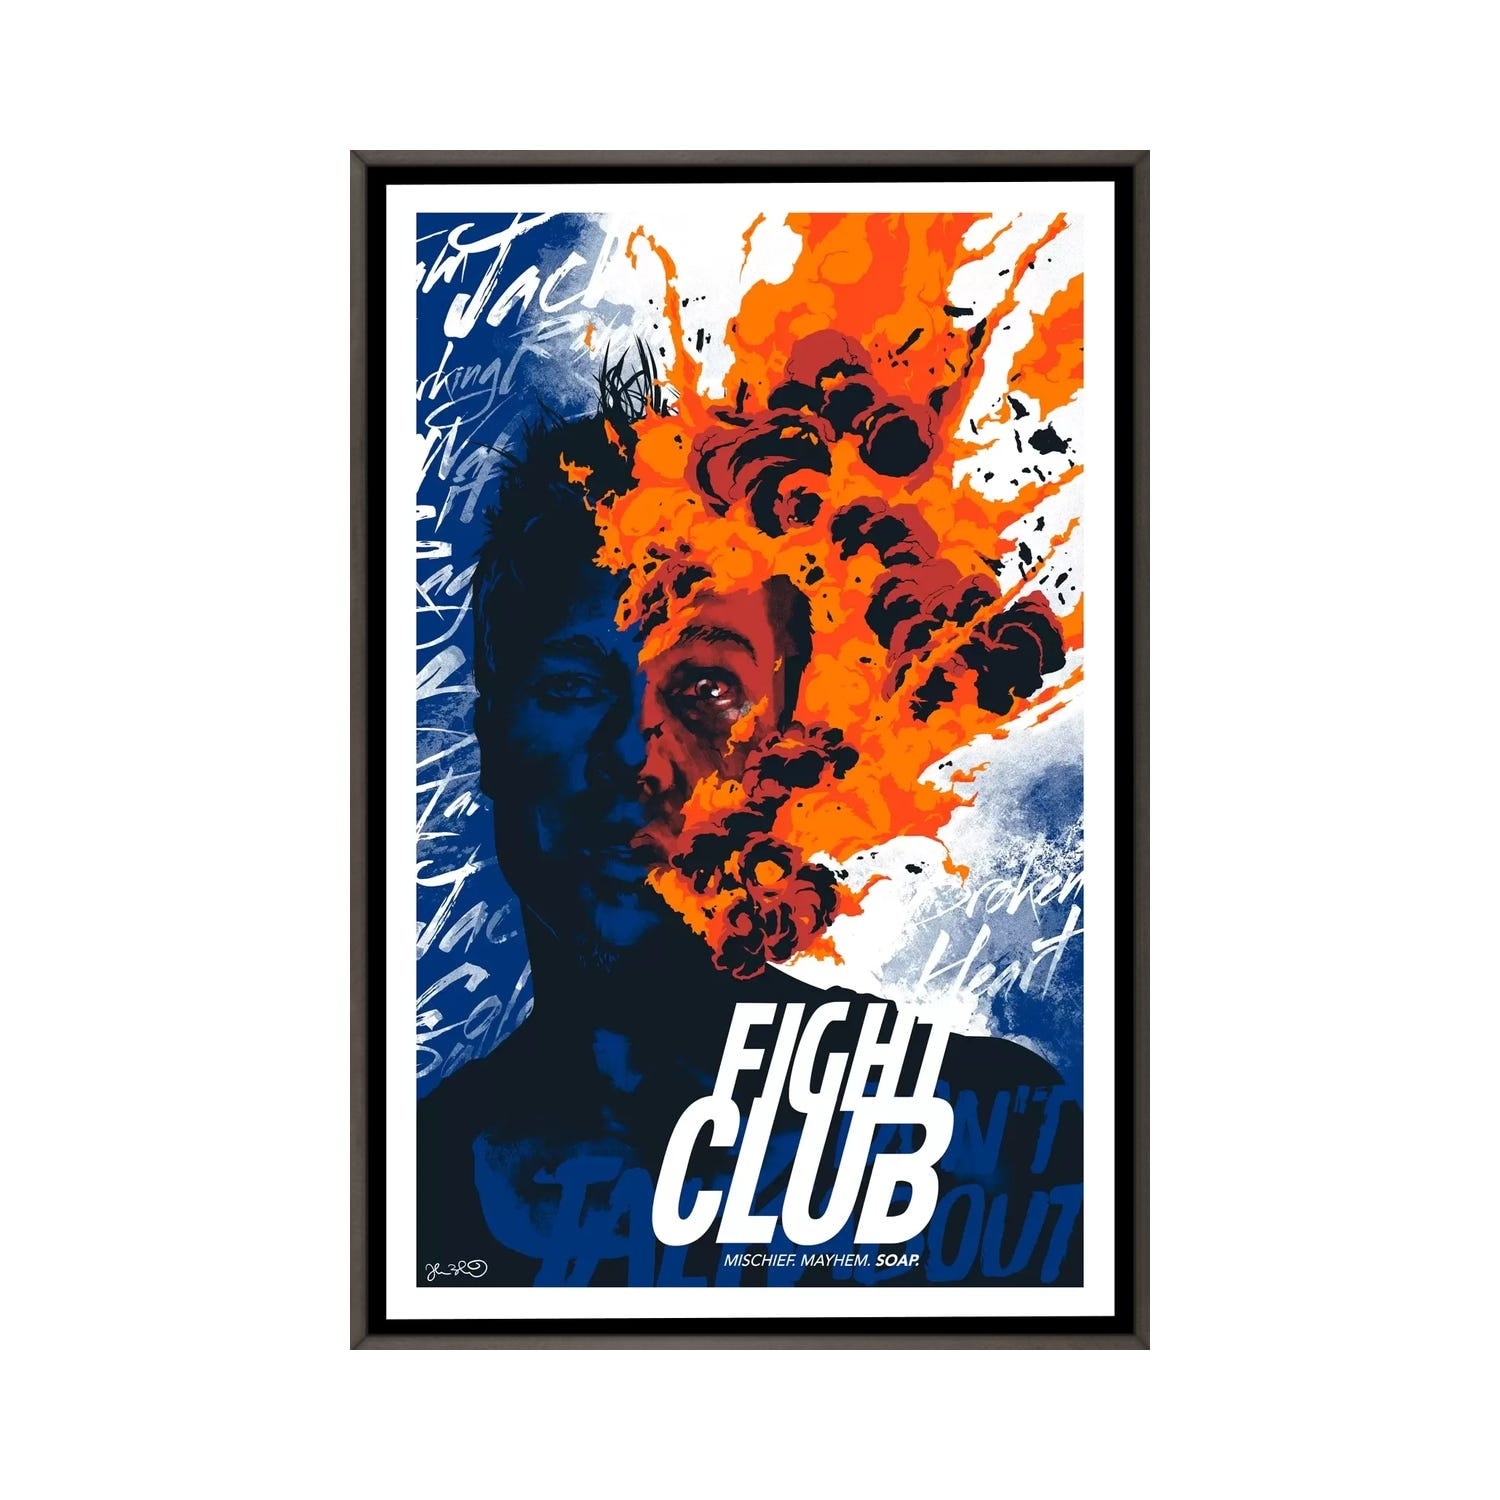 Fight Club Rules print by Nikita Abakumov